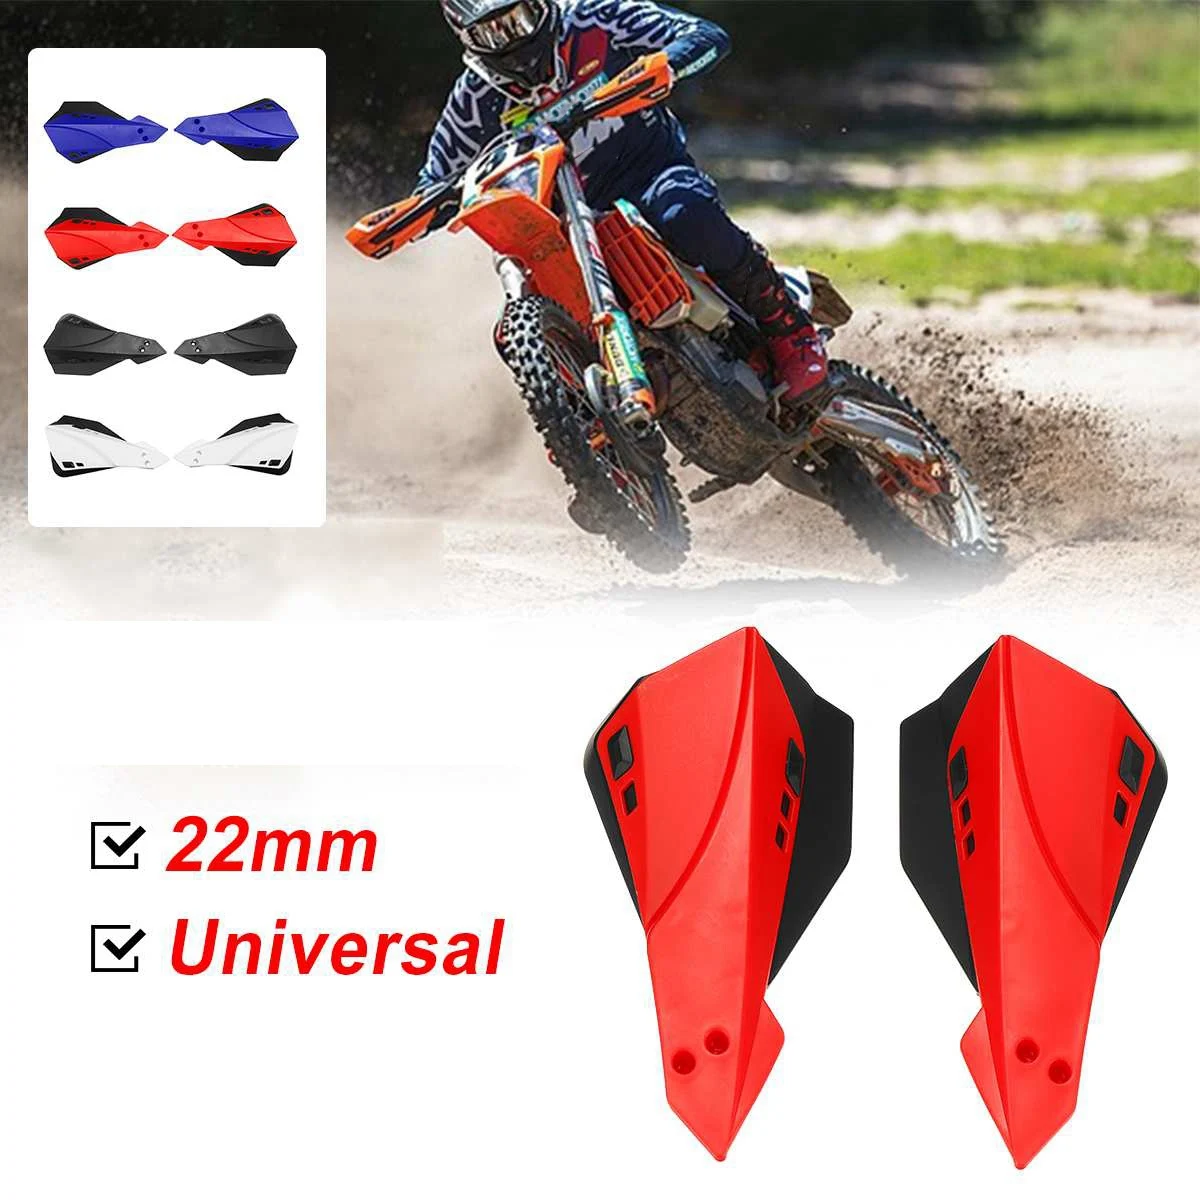 Protector de mano Universal para motocicleta, Protector de manillar para Motocross, 22mm